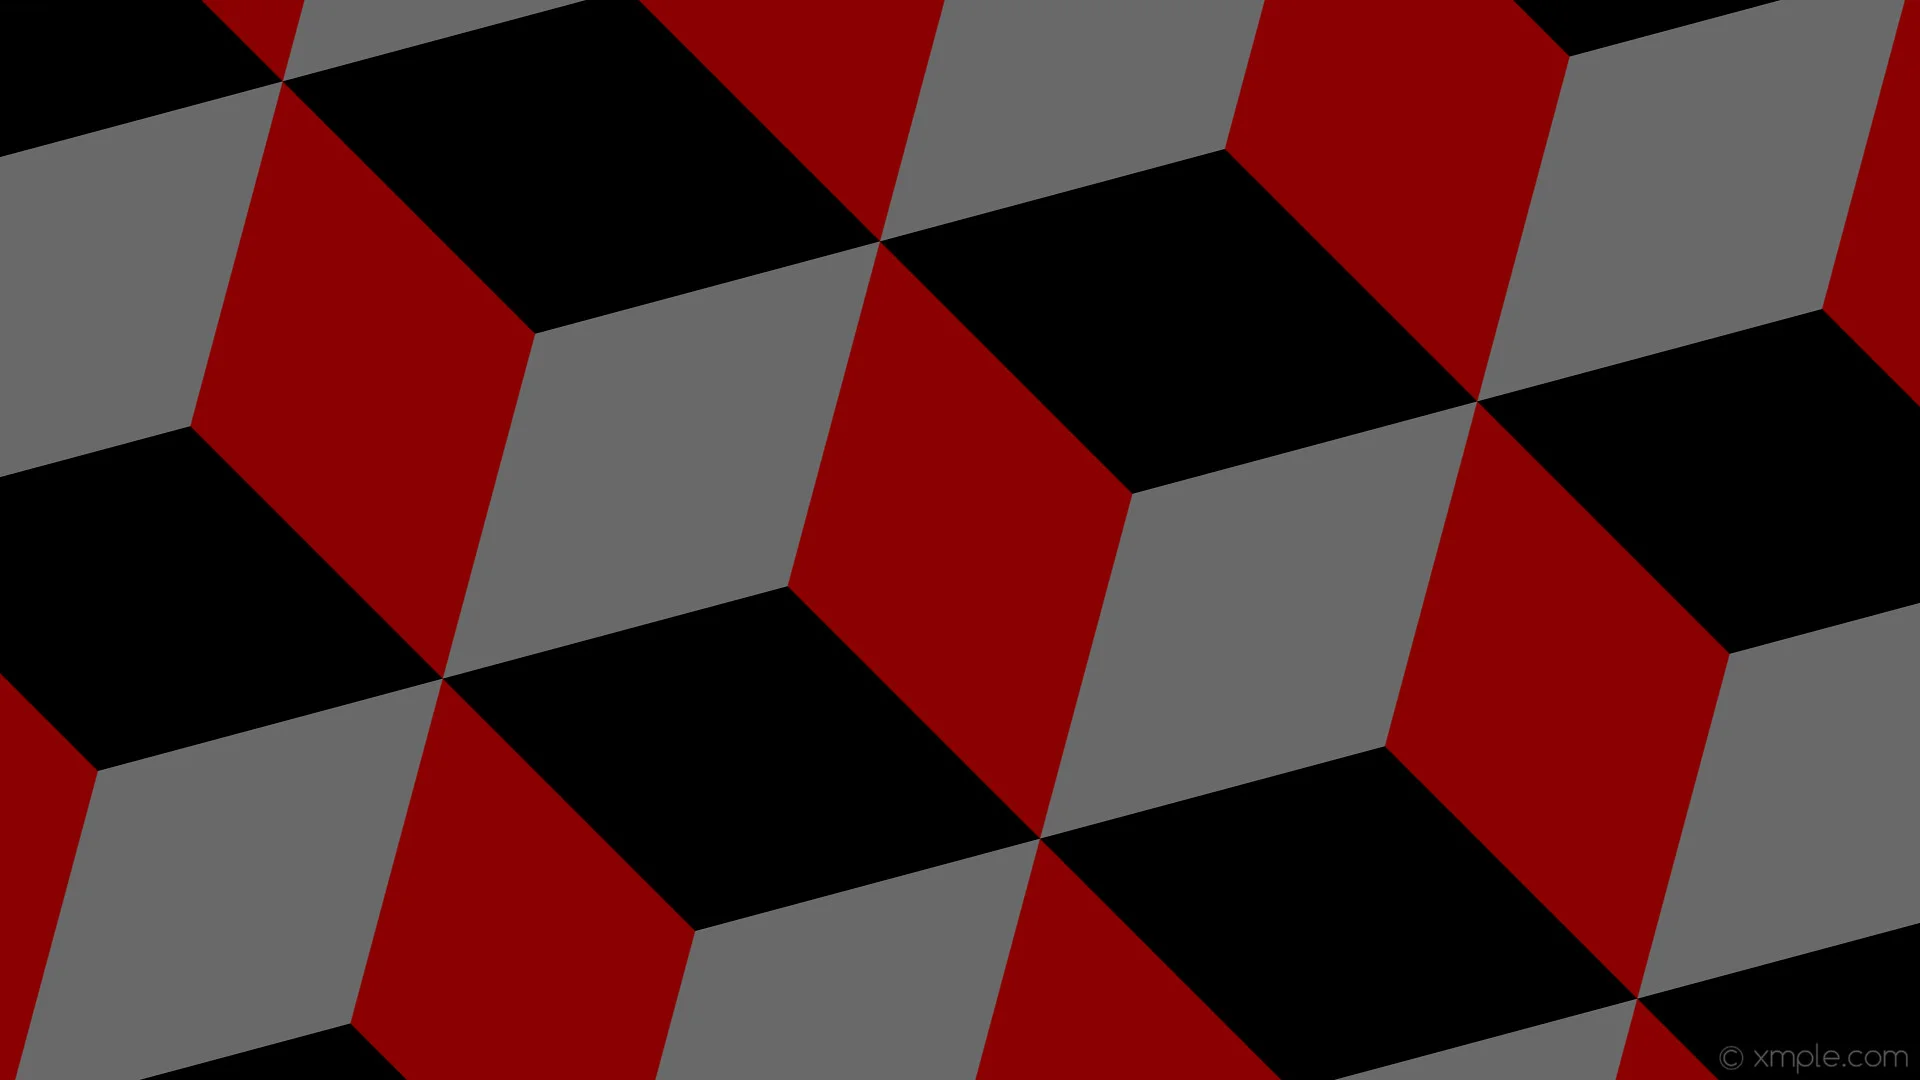 wallpaper red grey 3d cubes black dark red dim gray #8b0000 #696969 #000000